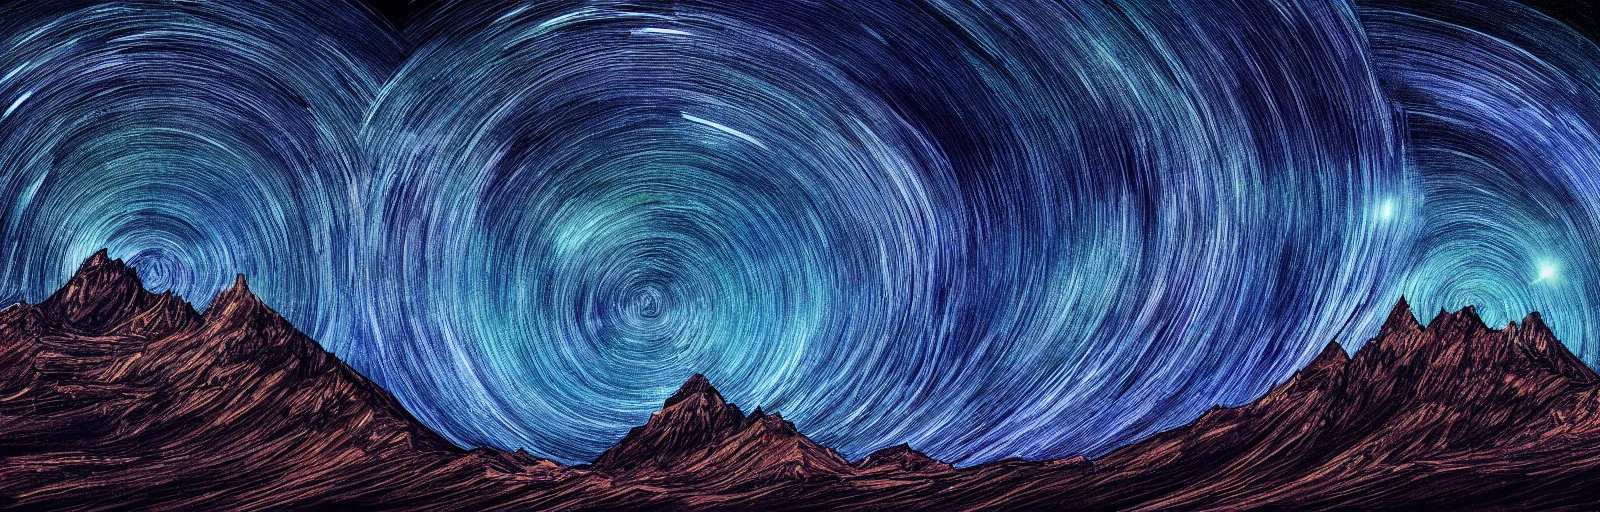 Prompt: Really long organic cronenberg rocket train scaling spiraling a towering mountain starry moonlit night sky, amazing digital art 4k